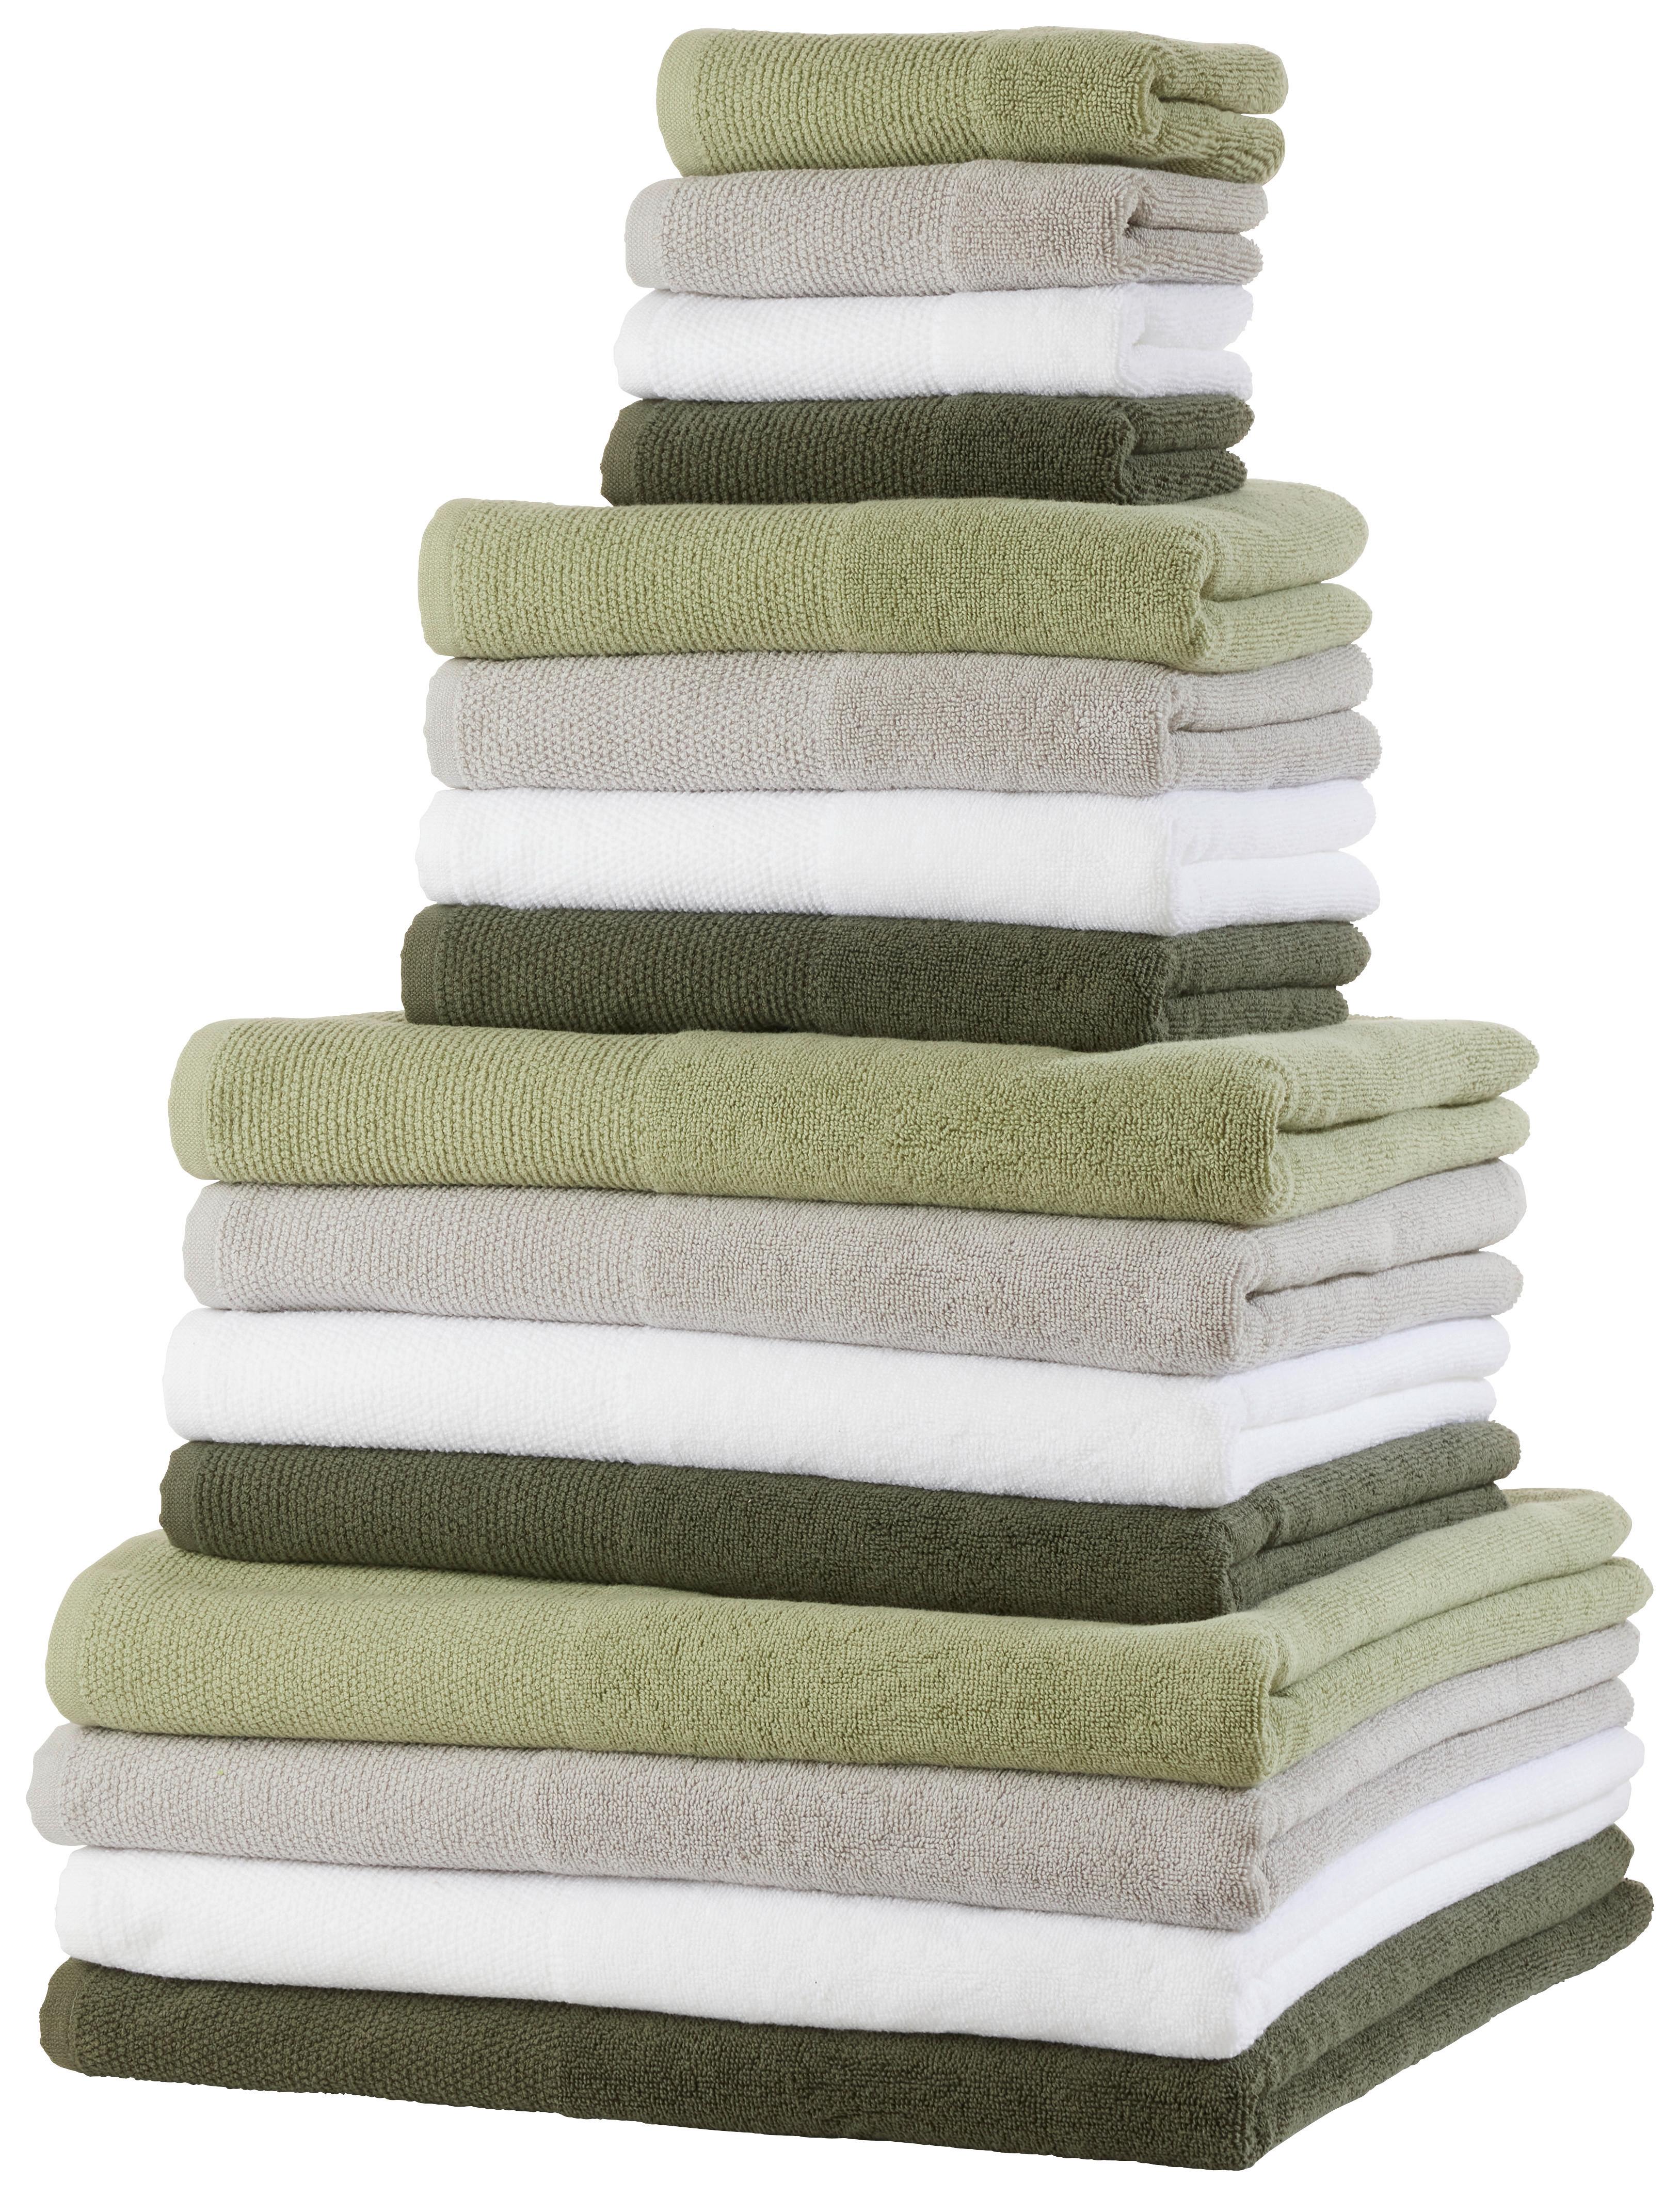 Handtuch Olivia in Naturfarben ca. 50x100cm - Naturfarben, Konventionell, Textil (50/100cm) - Premium Living